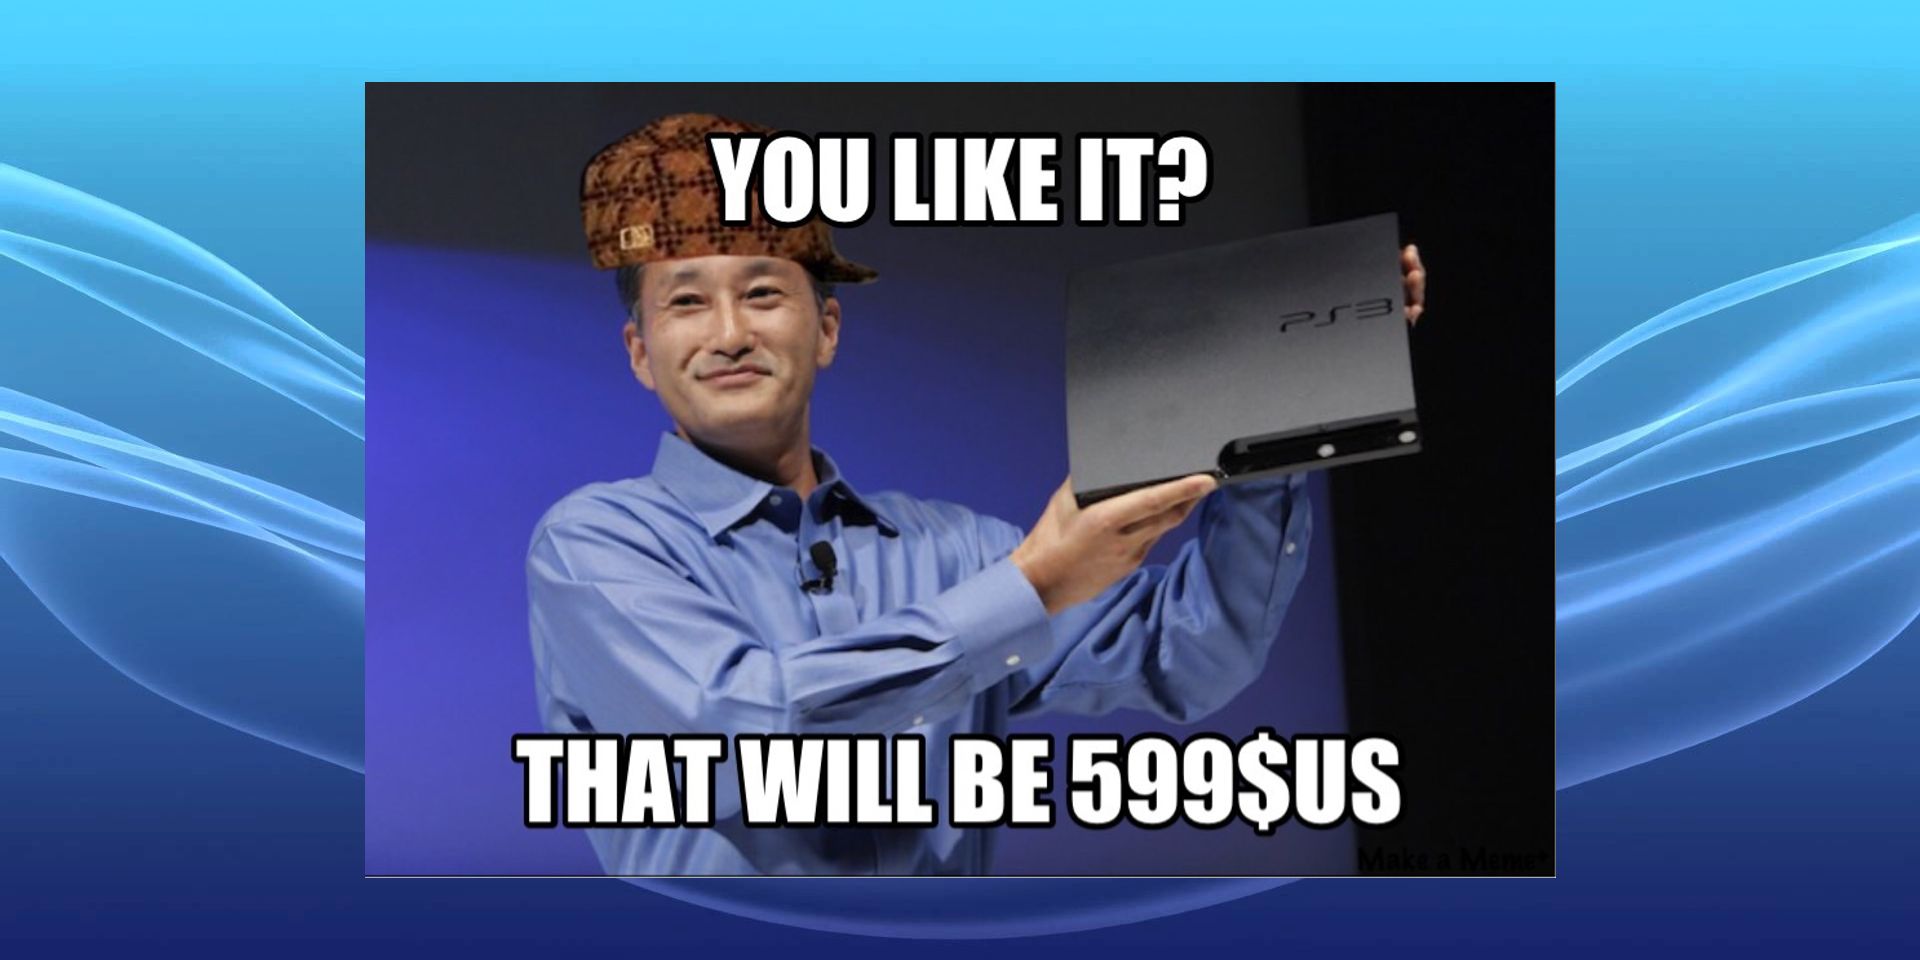 PS3 Price Meme